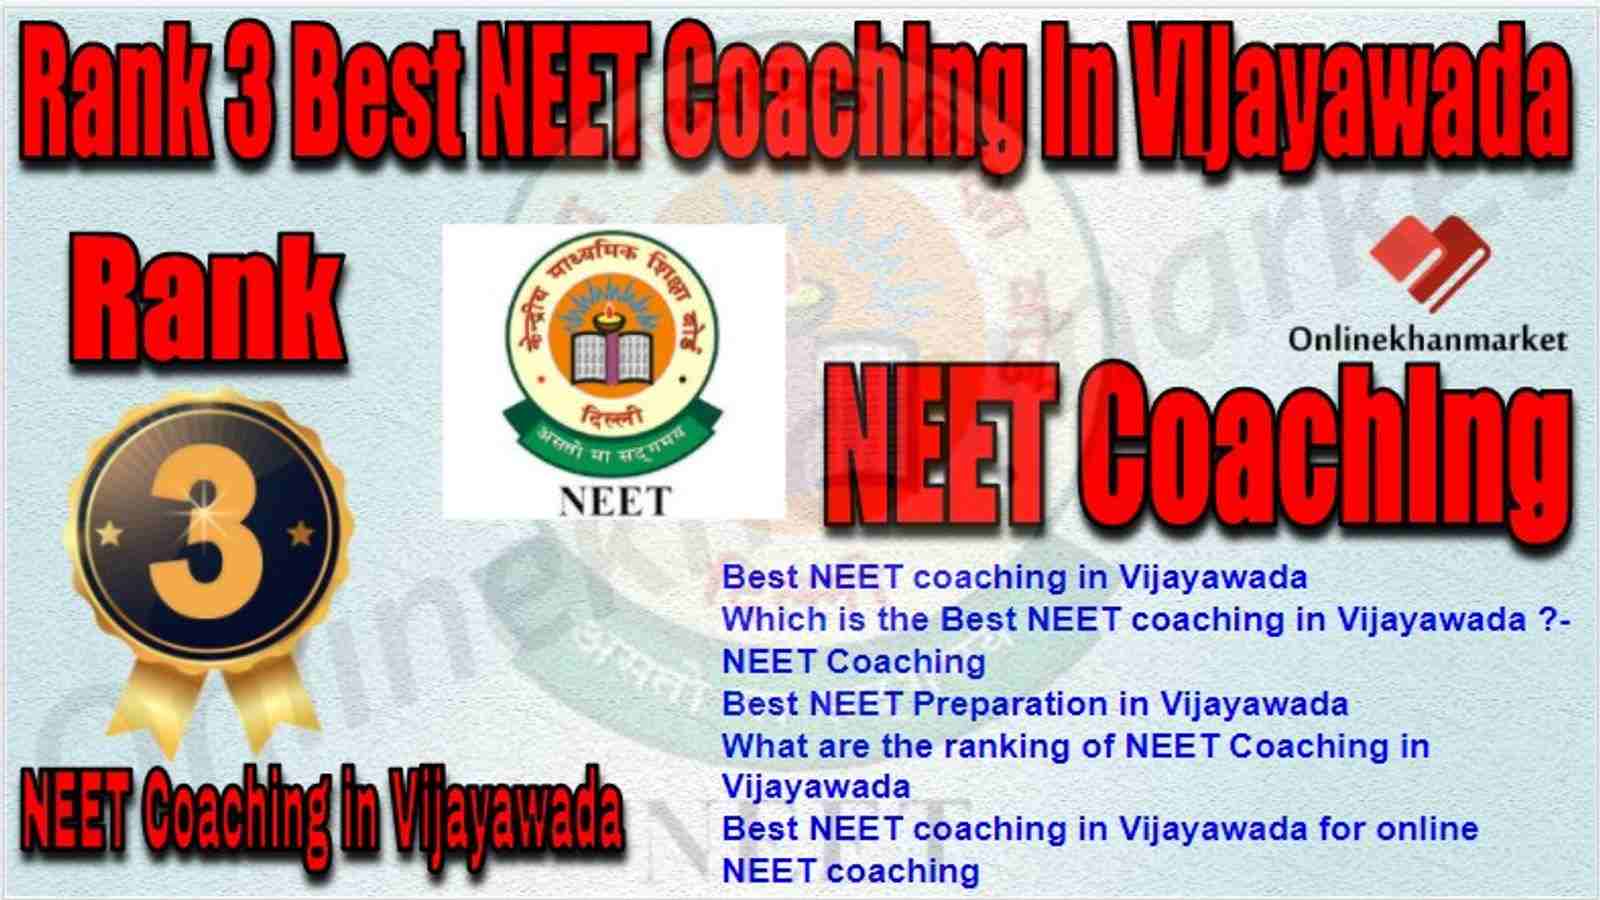 Rank 3 Best NEET Coaching vijayawada